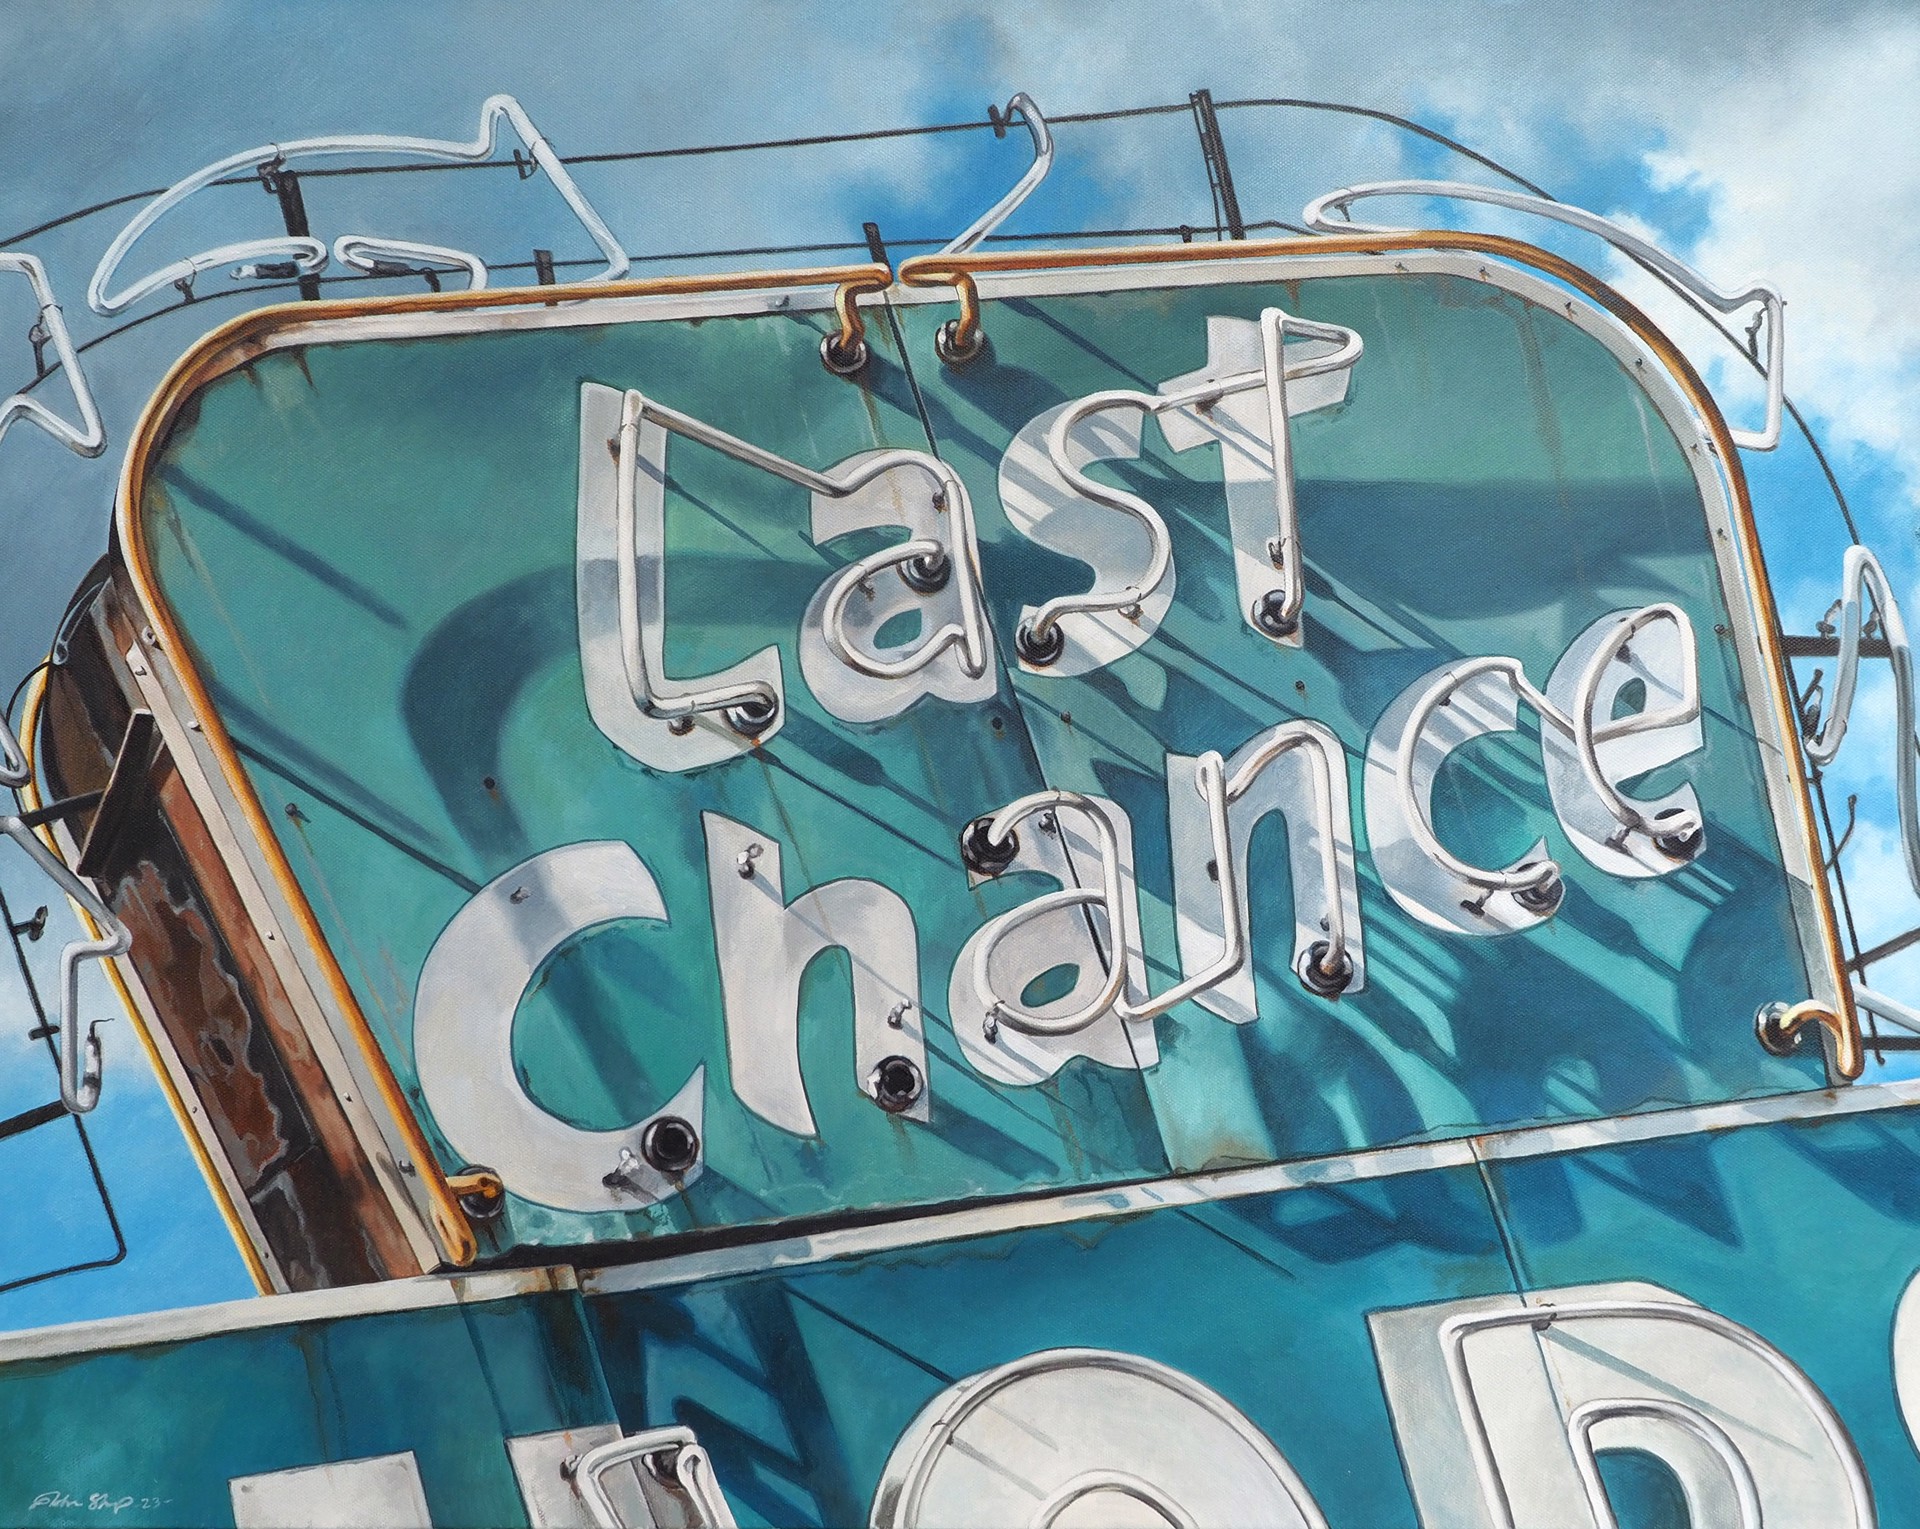 Last Chance by John Sharp